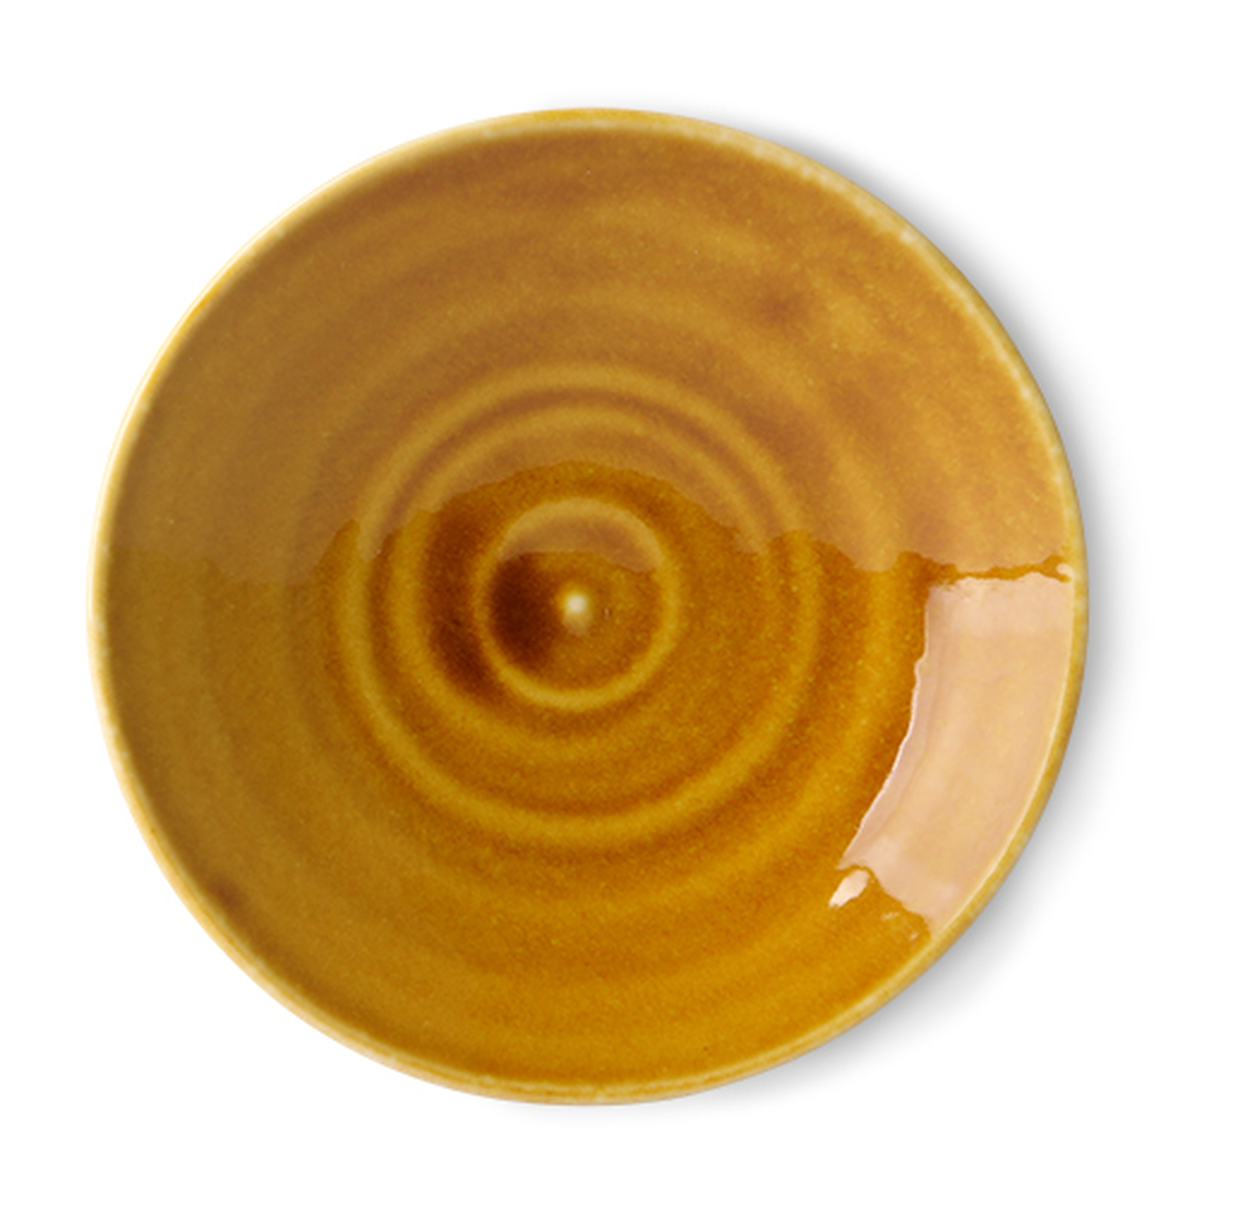 Kyoto ceramics: japanese small plate brown